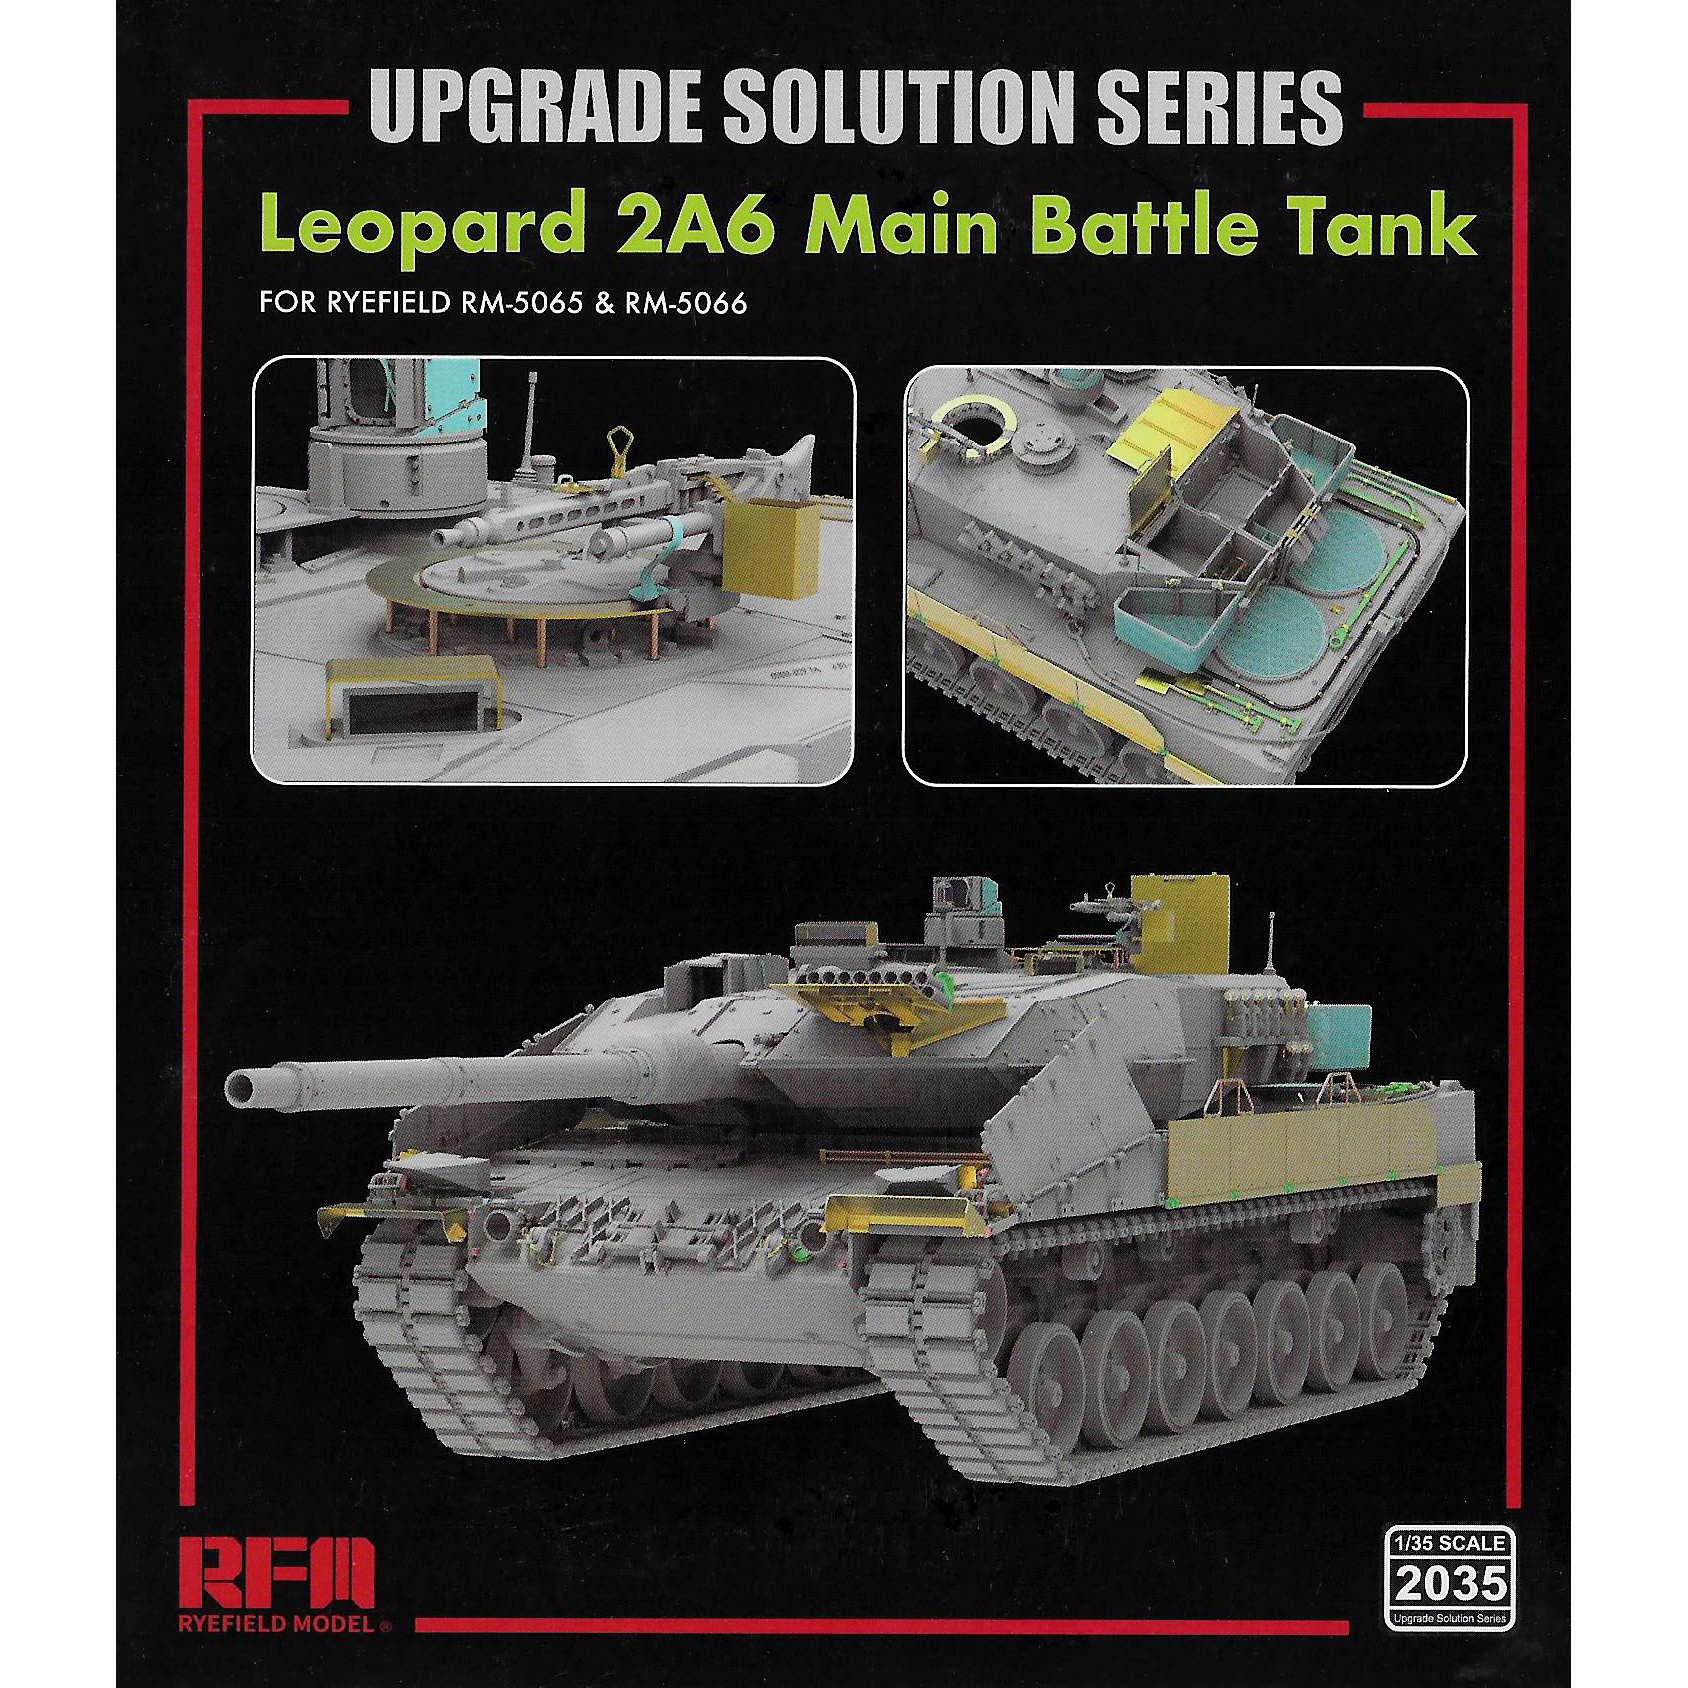 RM-2035 Rye Field Model 1/35 Набор деталей для улучшения Leopard 2A6 Main Battle Tank